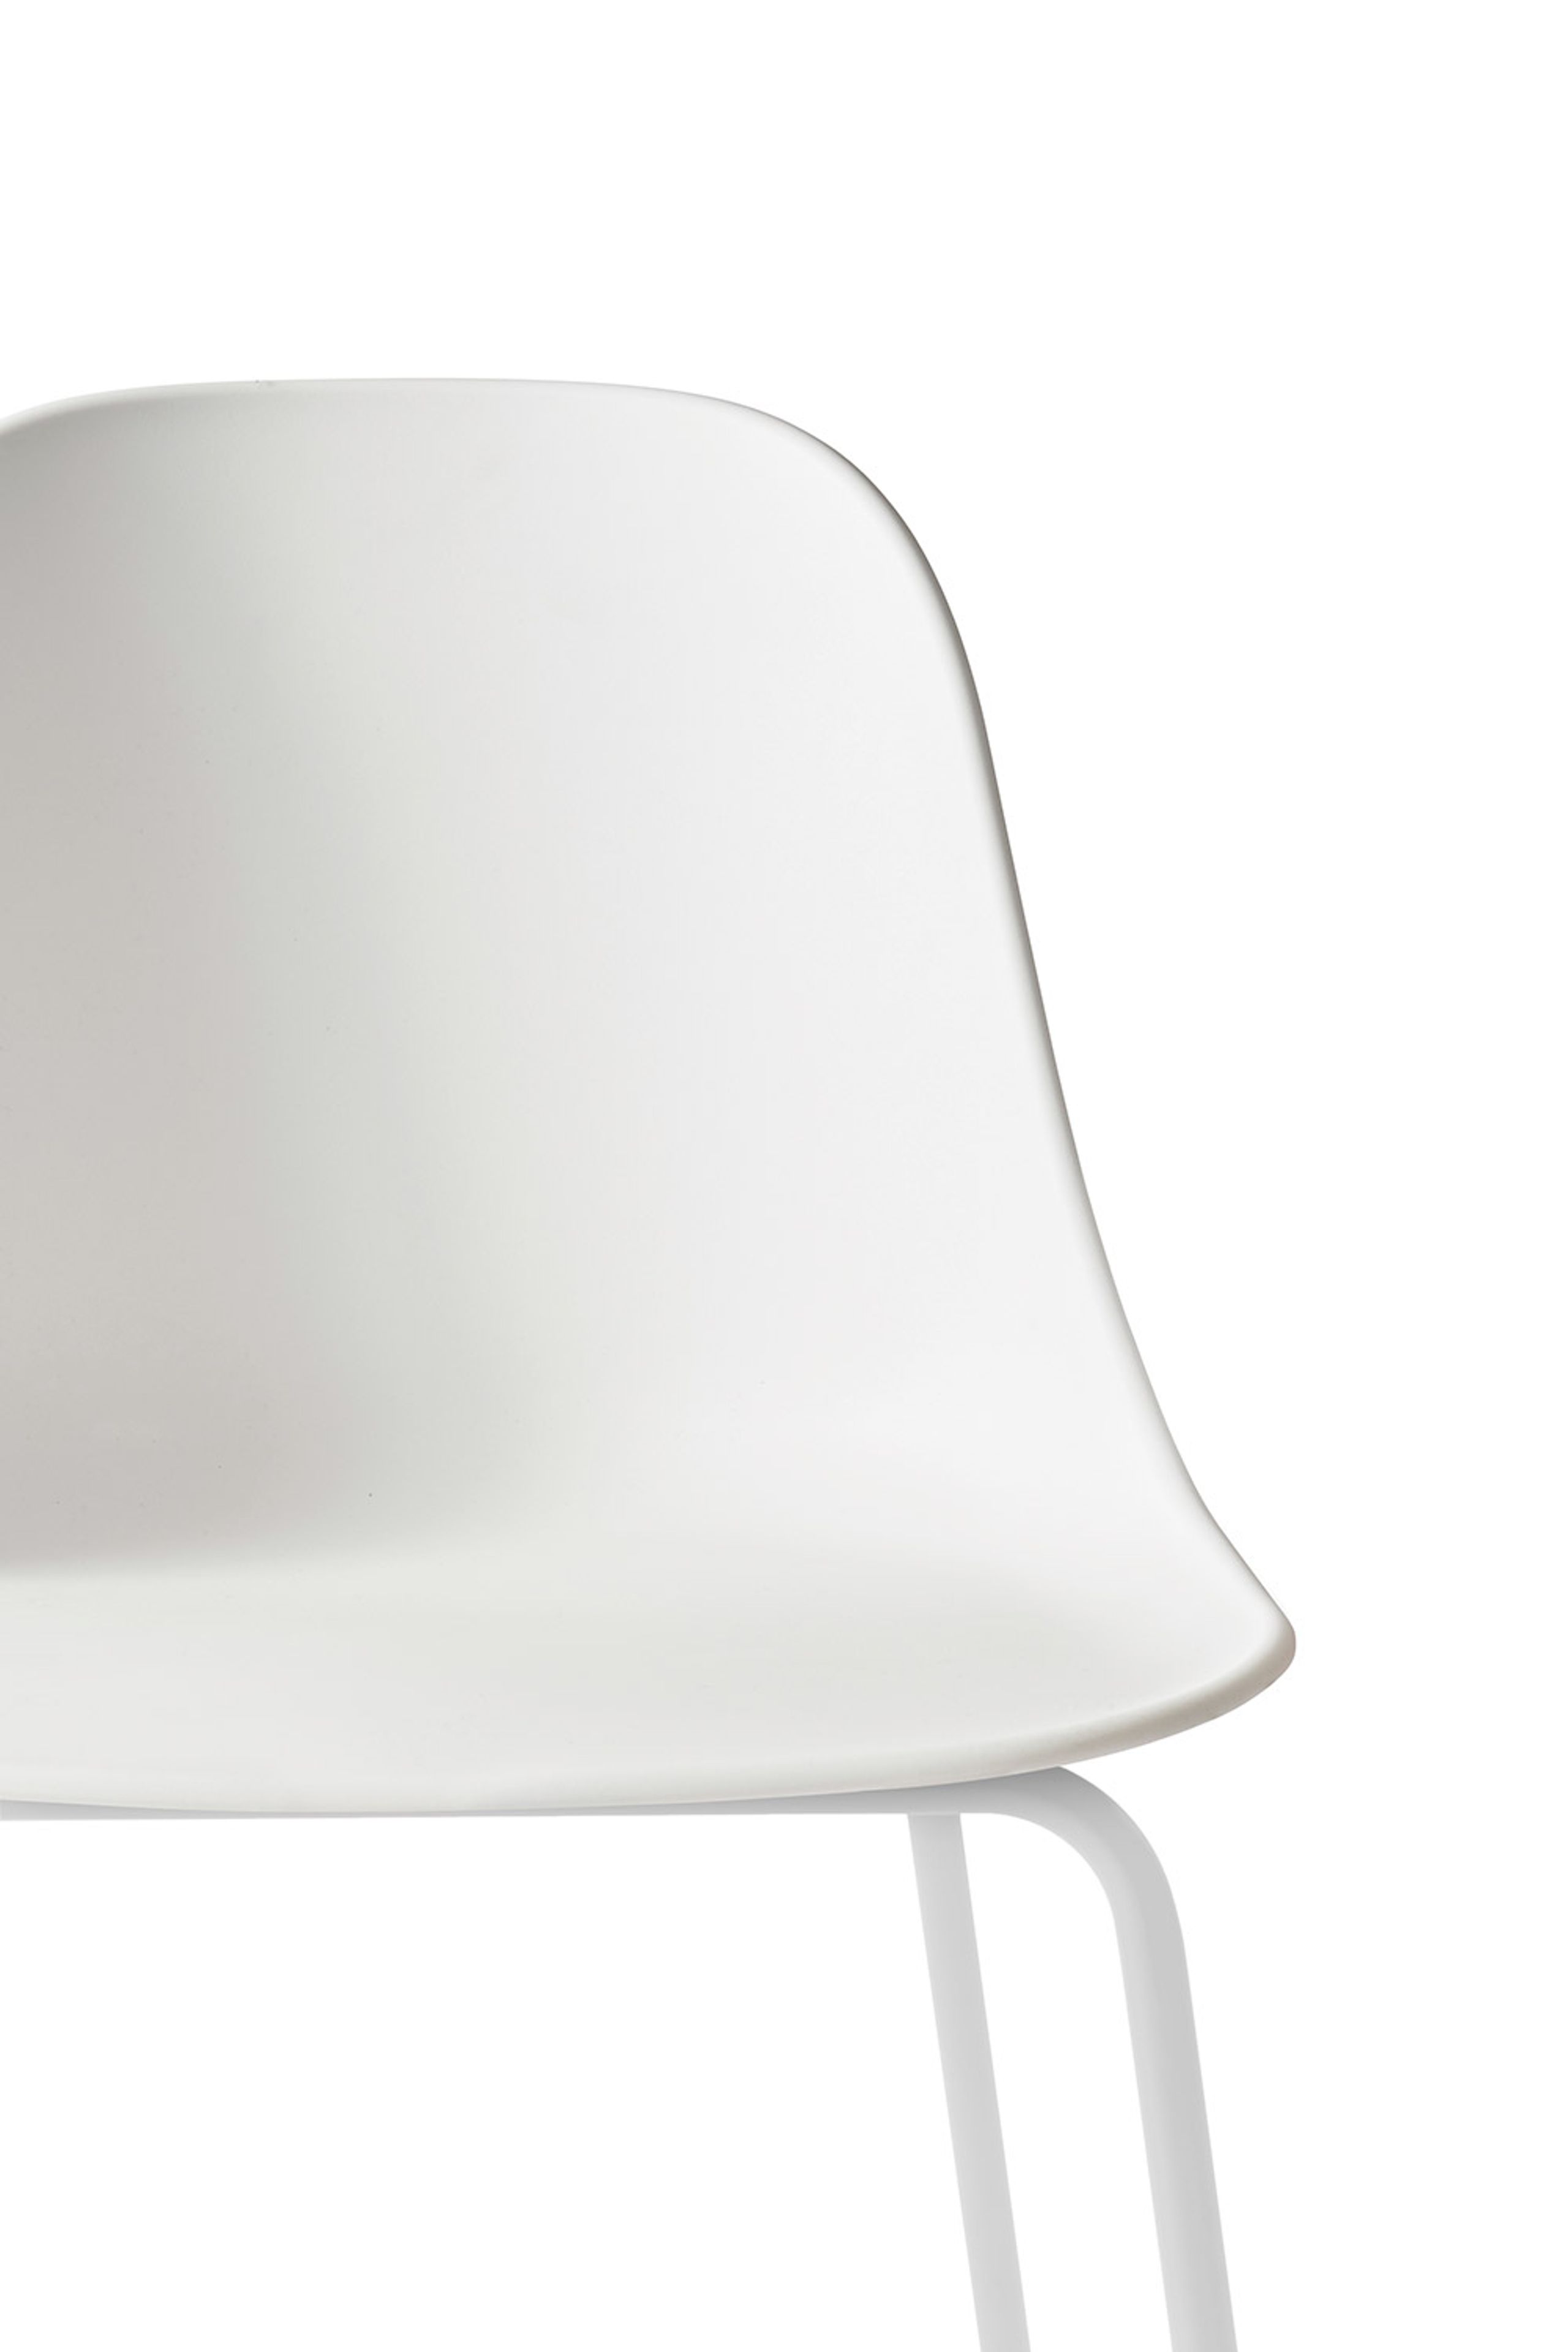 MENU - Tabouret de bar - Harbour Bar Counter Chair / Black Steel Base - White